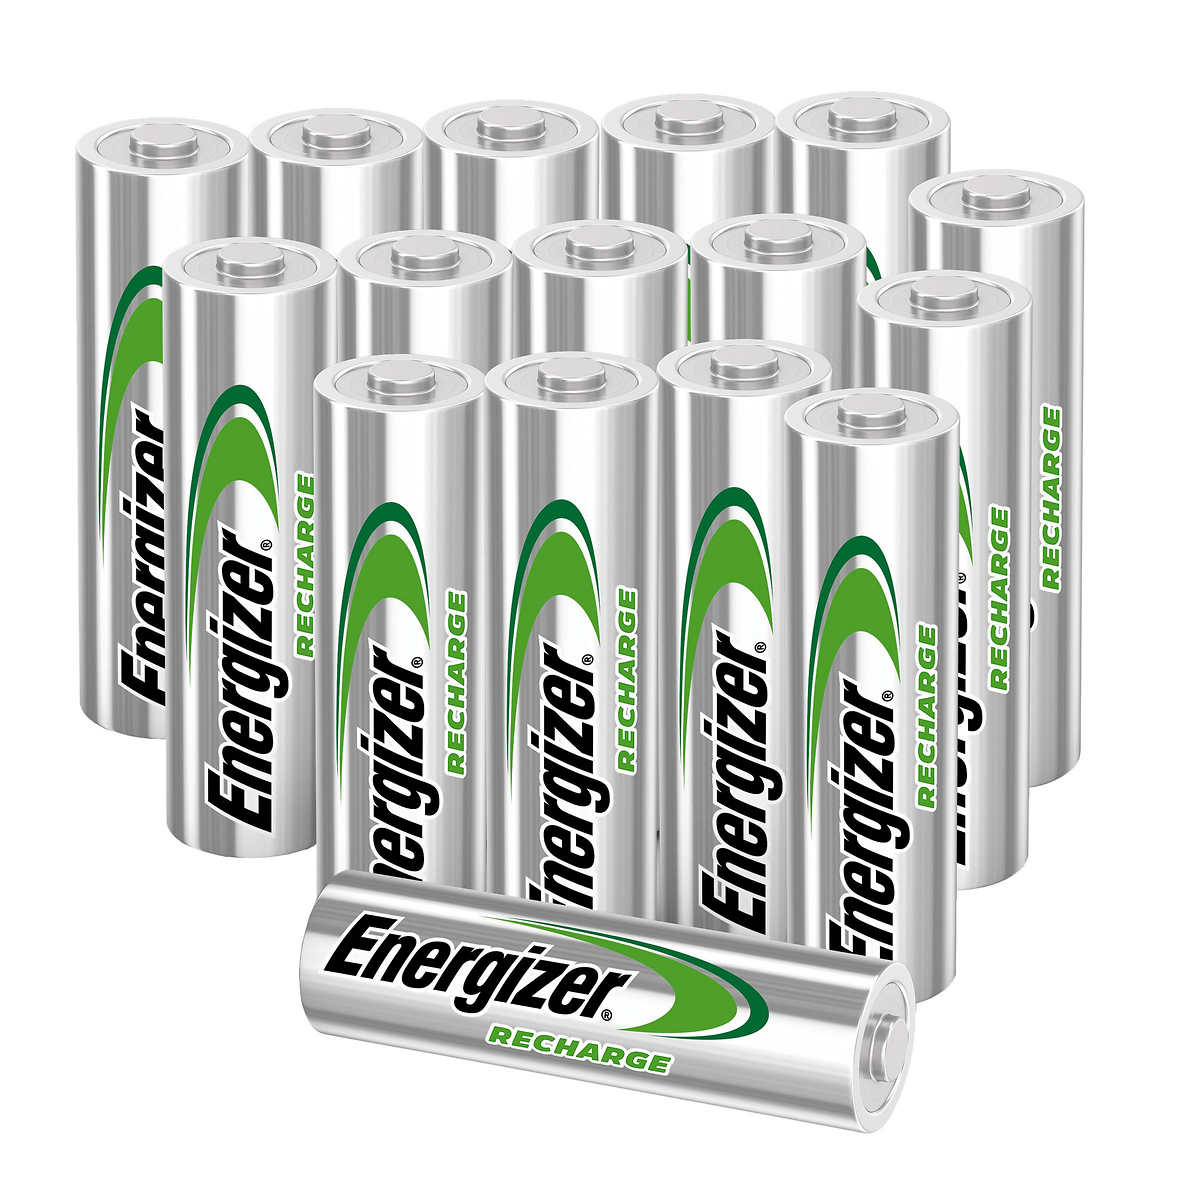 Lastig verdund Collega Energizer Rechargeable 2300 mAH AA Batteries, 16-pack | Costco